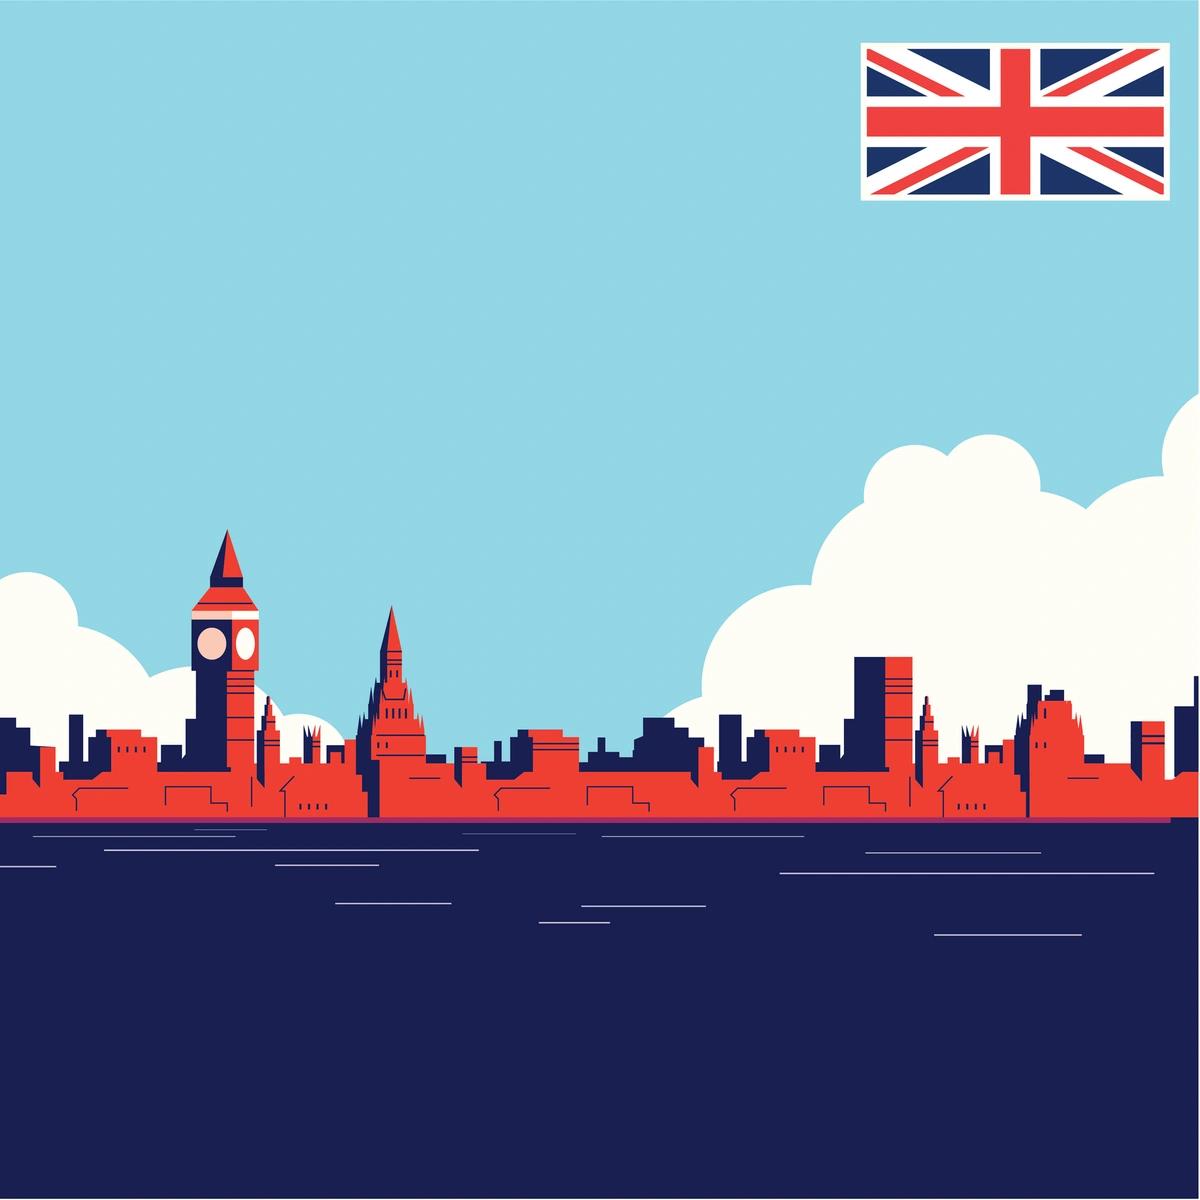 Illustration of London landscape with UK flag